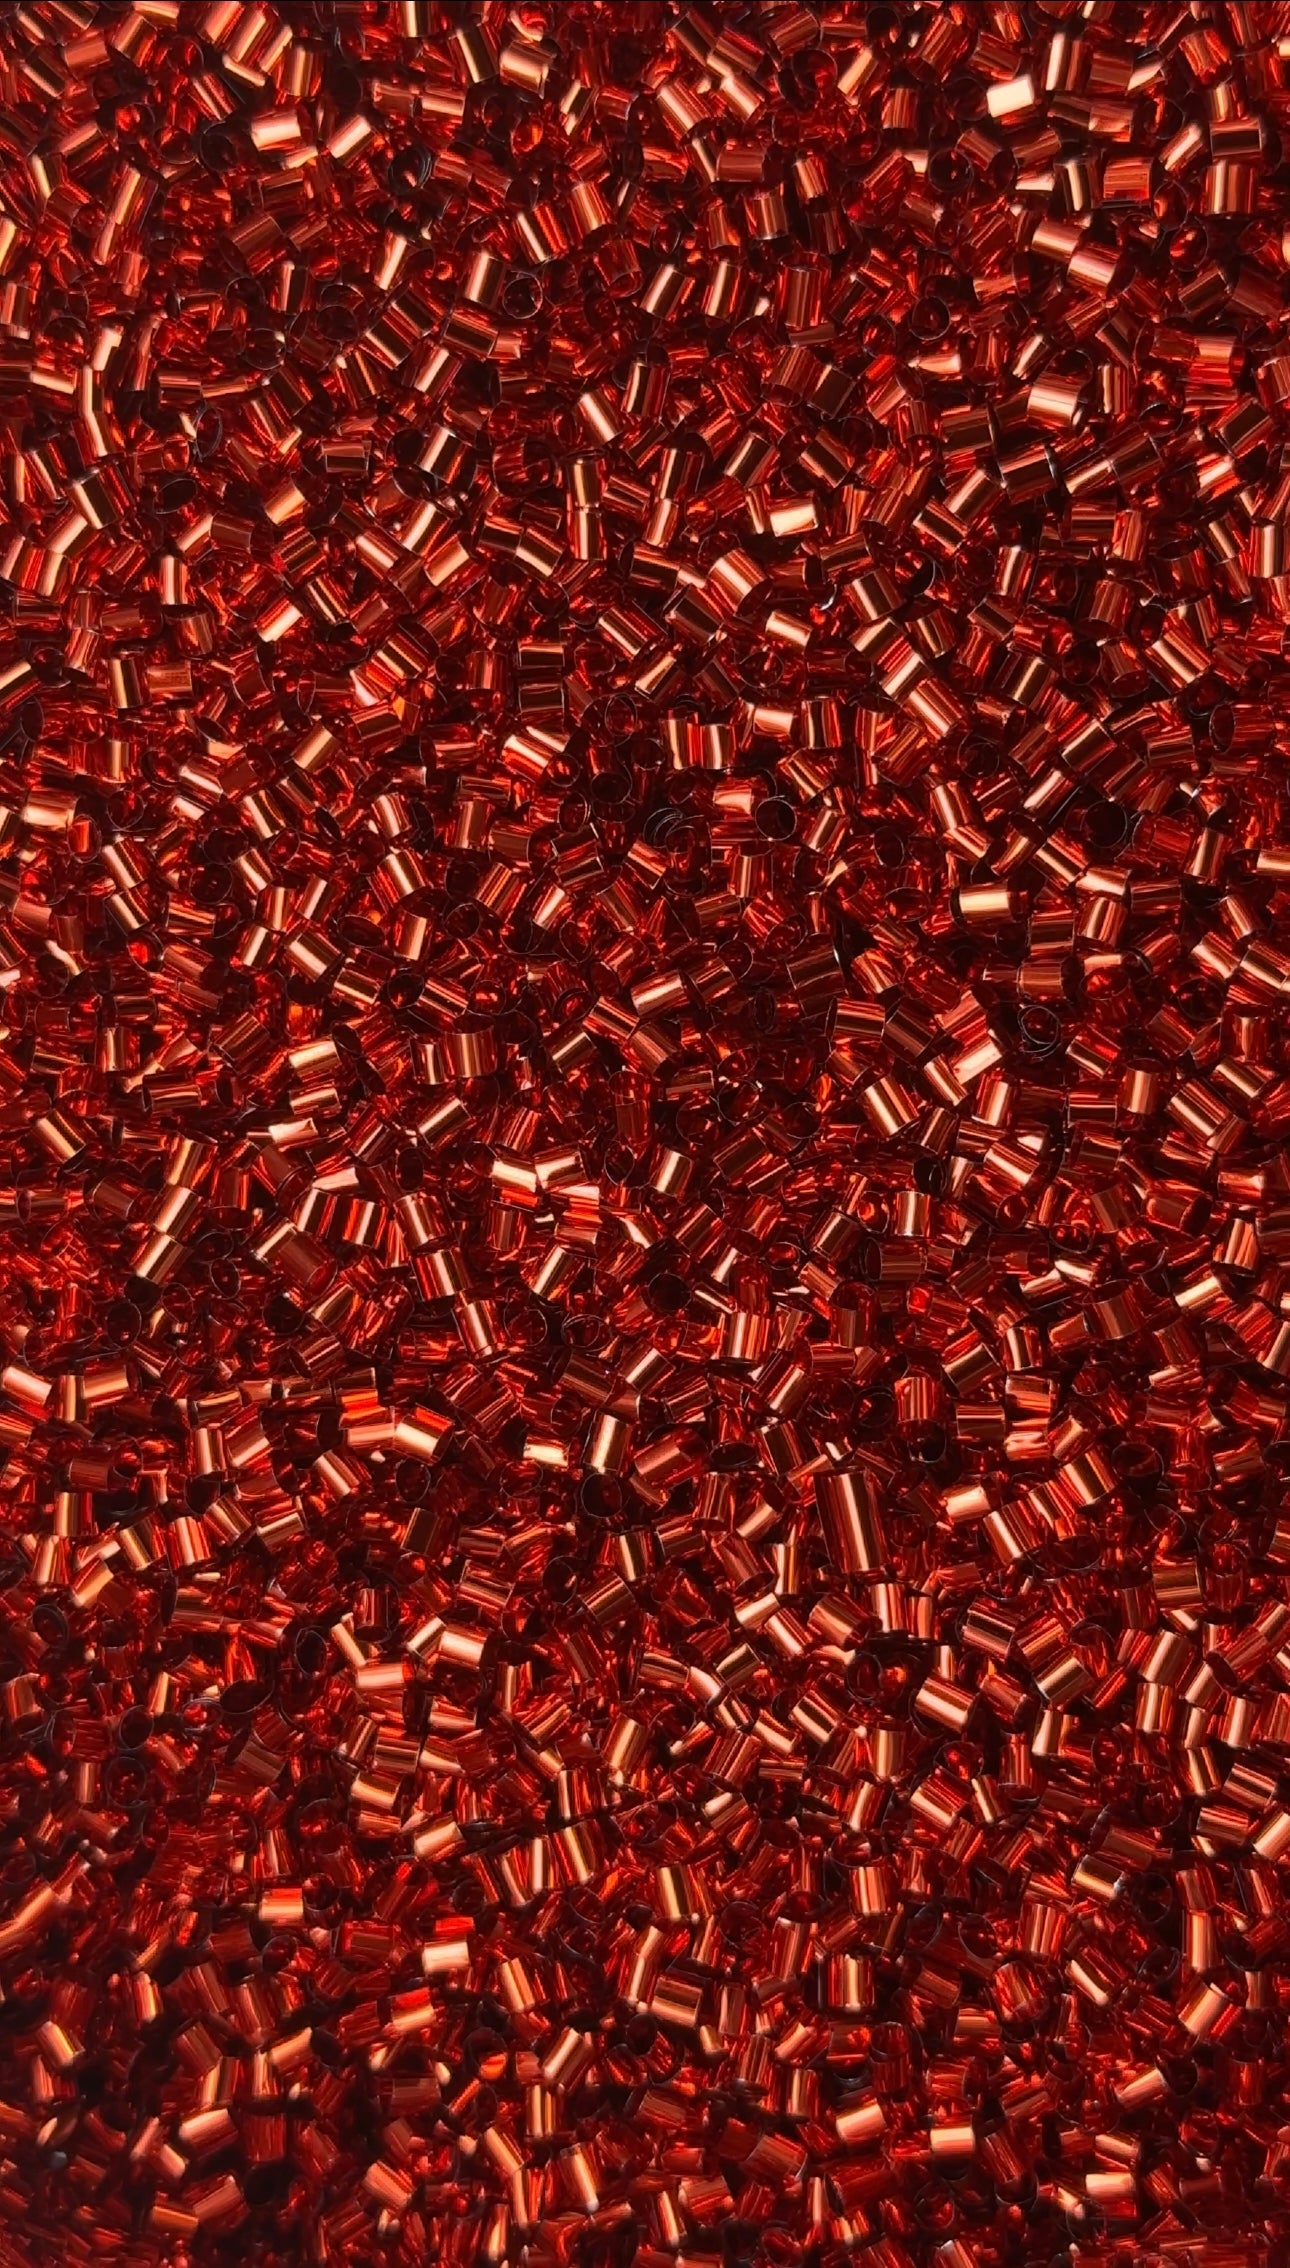 Ruby Red tube confetti